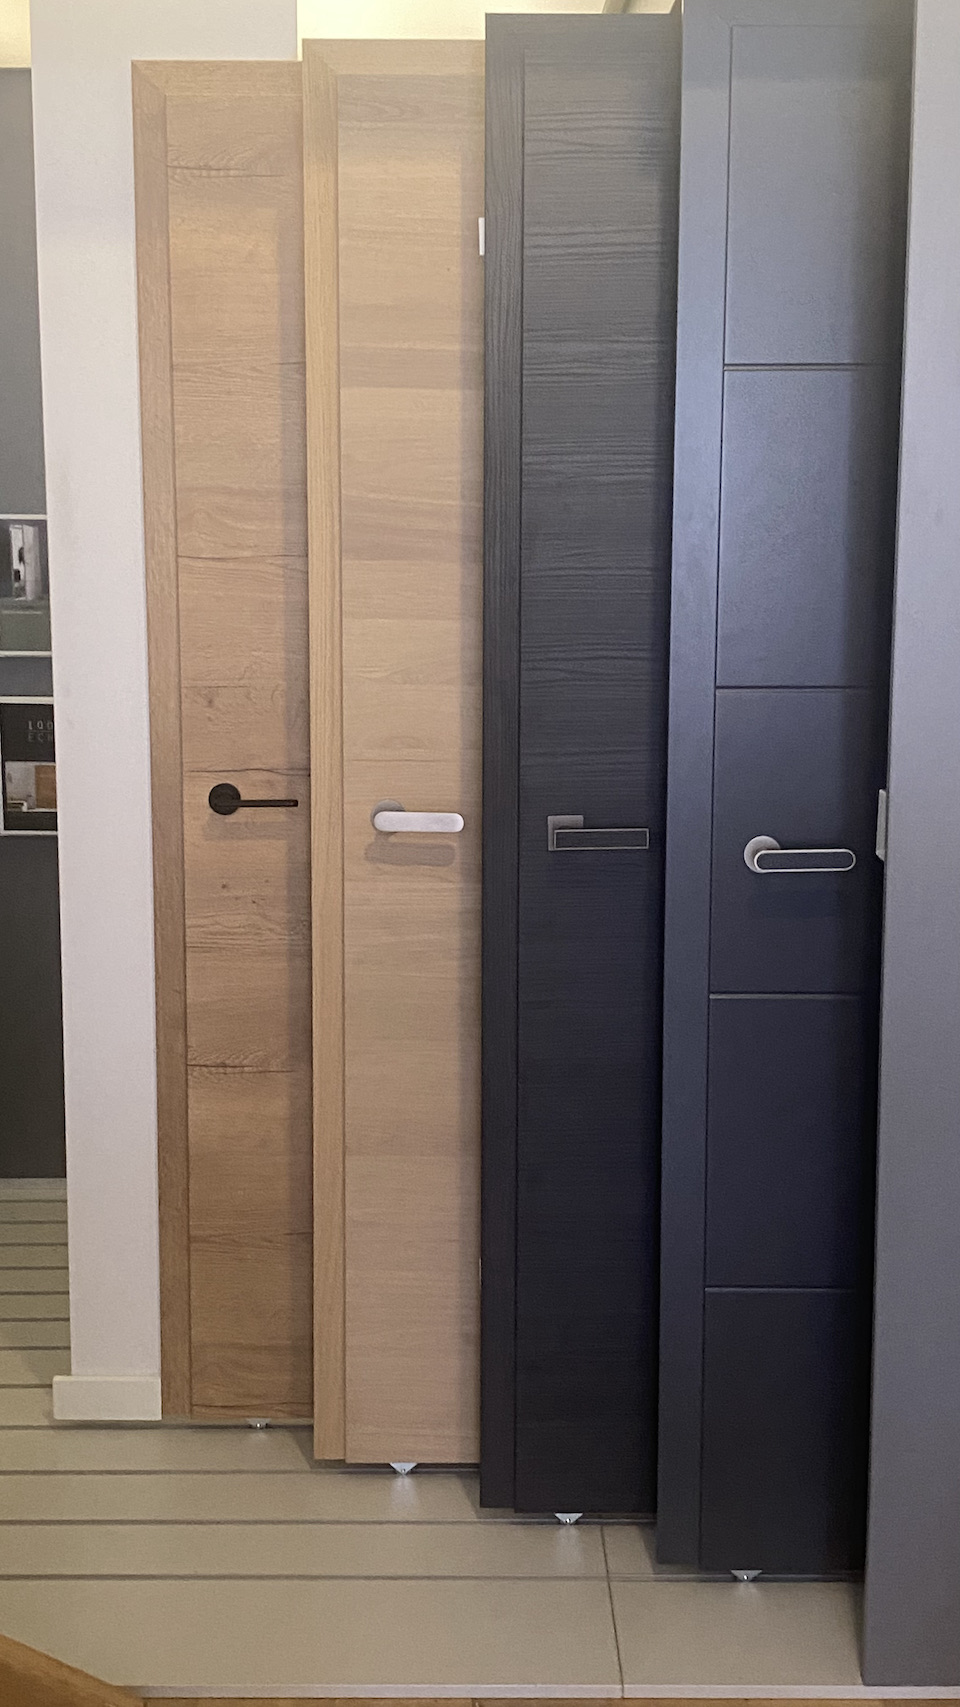 Türen bei Daniel Albani - Gestaltung in Holz